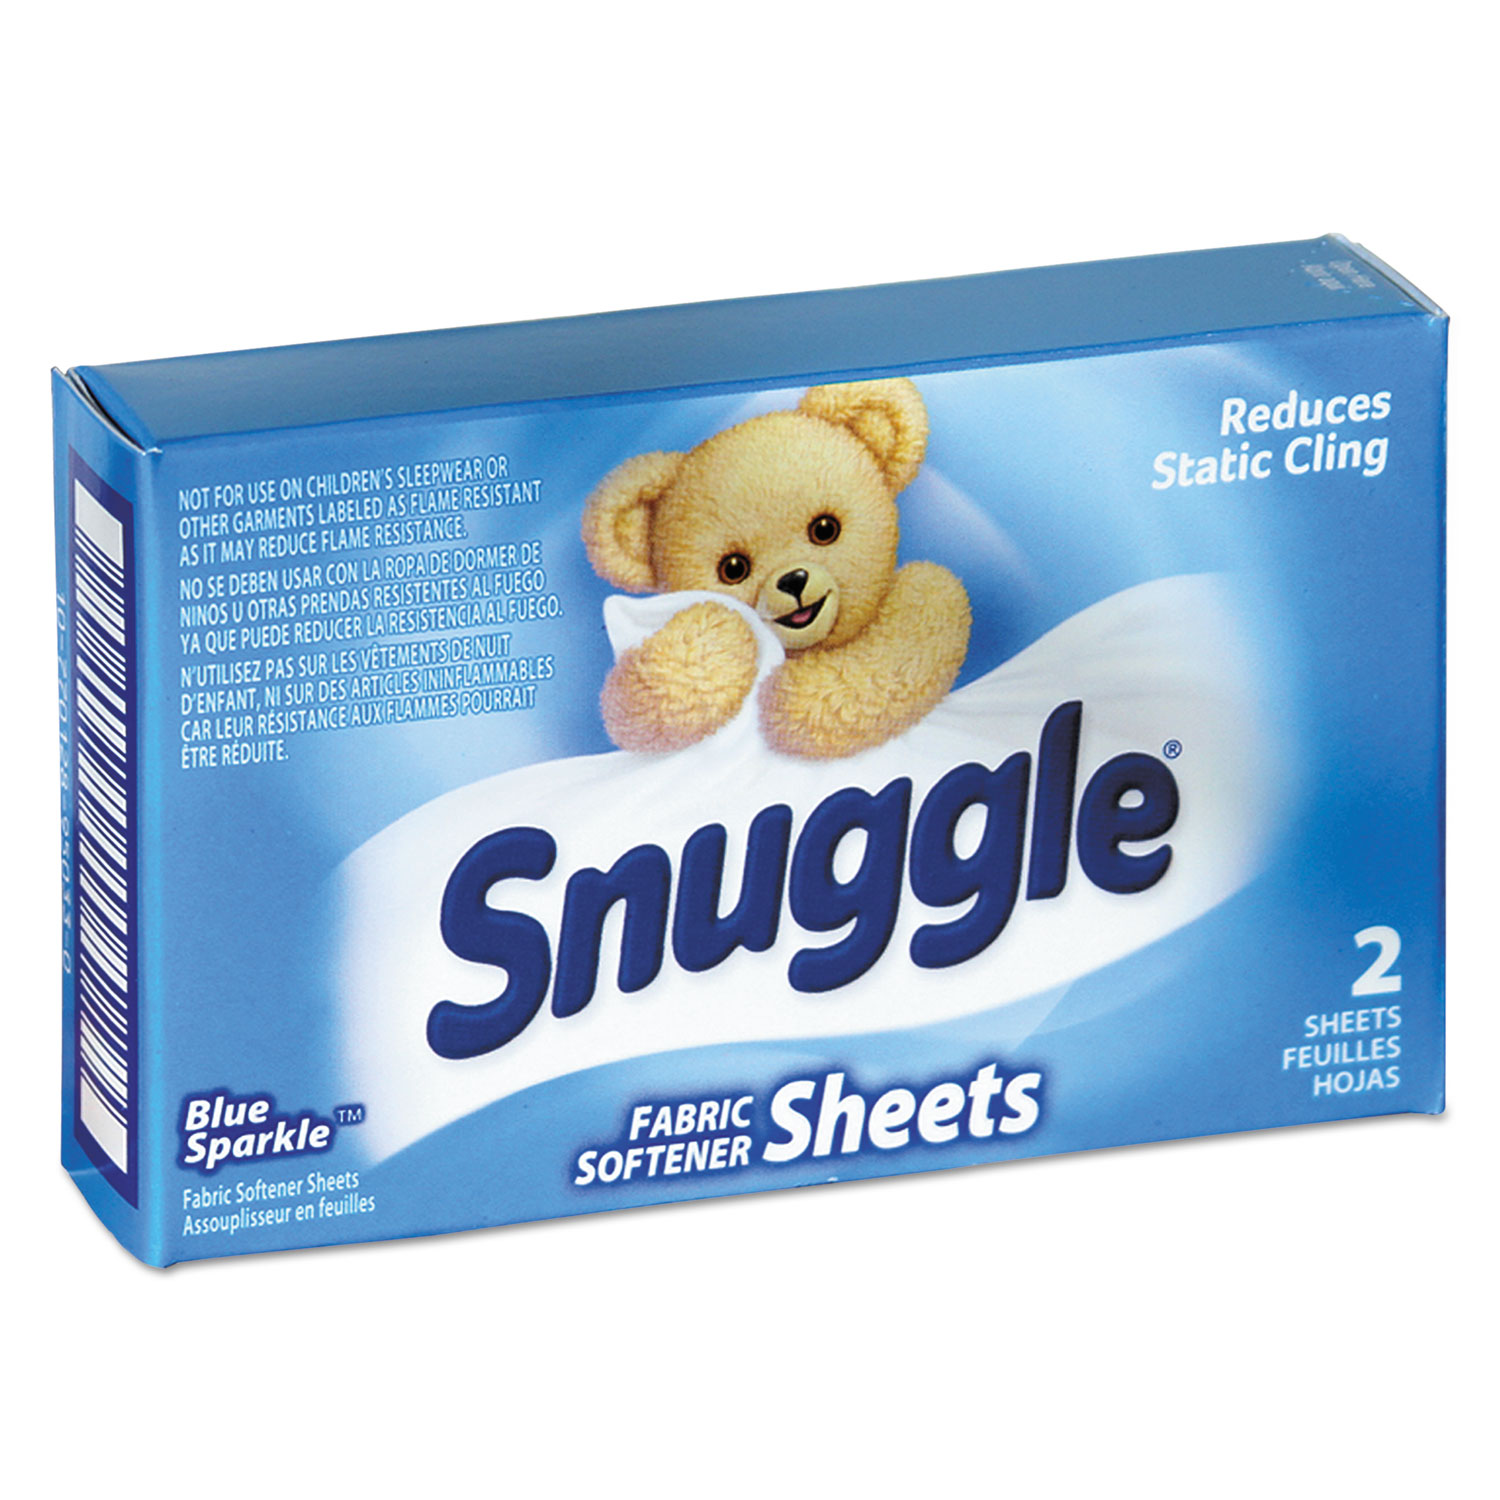  Snuggle VEN 2979929 Vend-Design Fabric Softener Sheets, Blue Sparkle, 2 Sheets/Box, 100 Boxes/Carton (VEN2979929) 